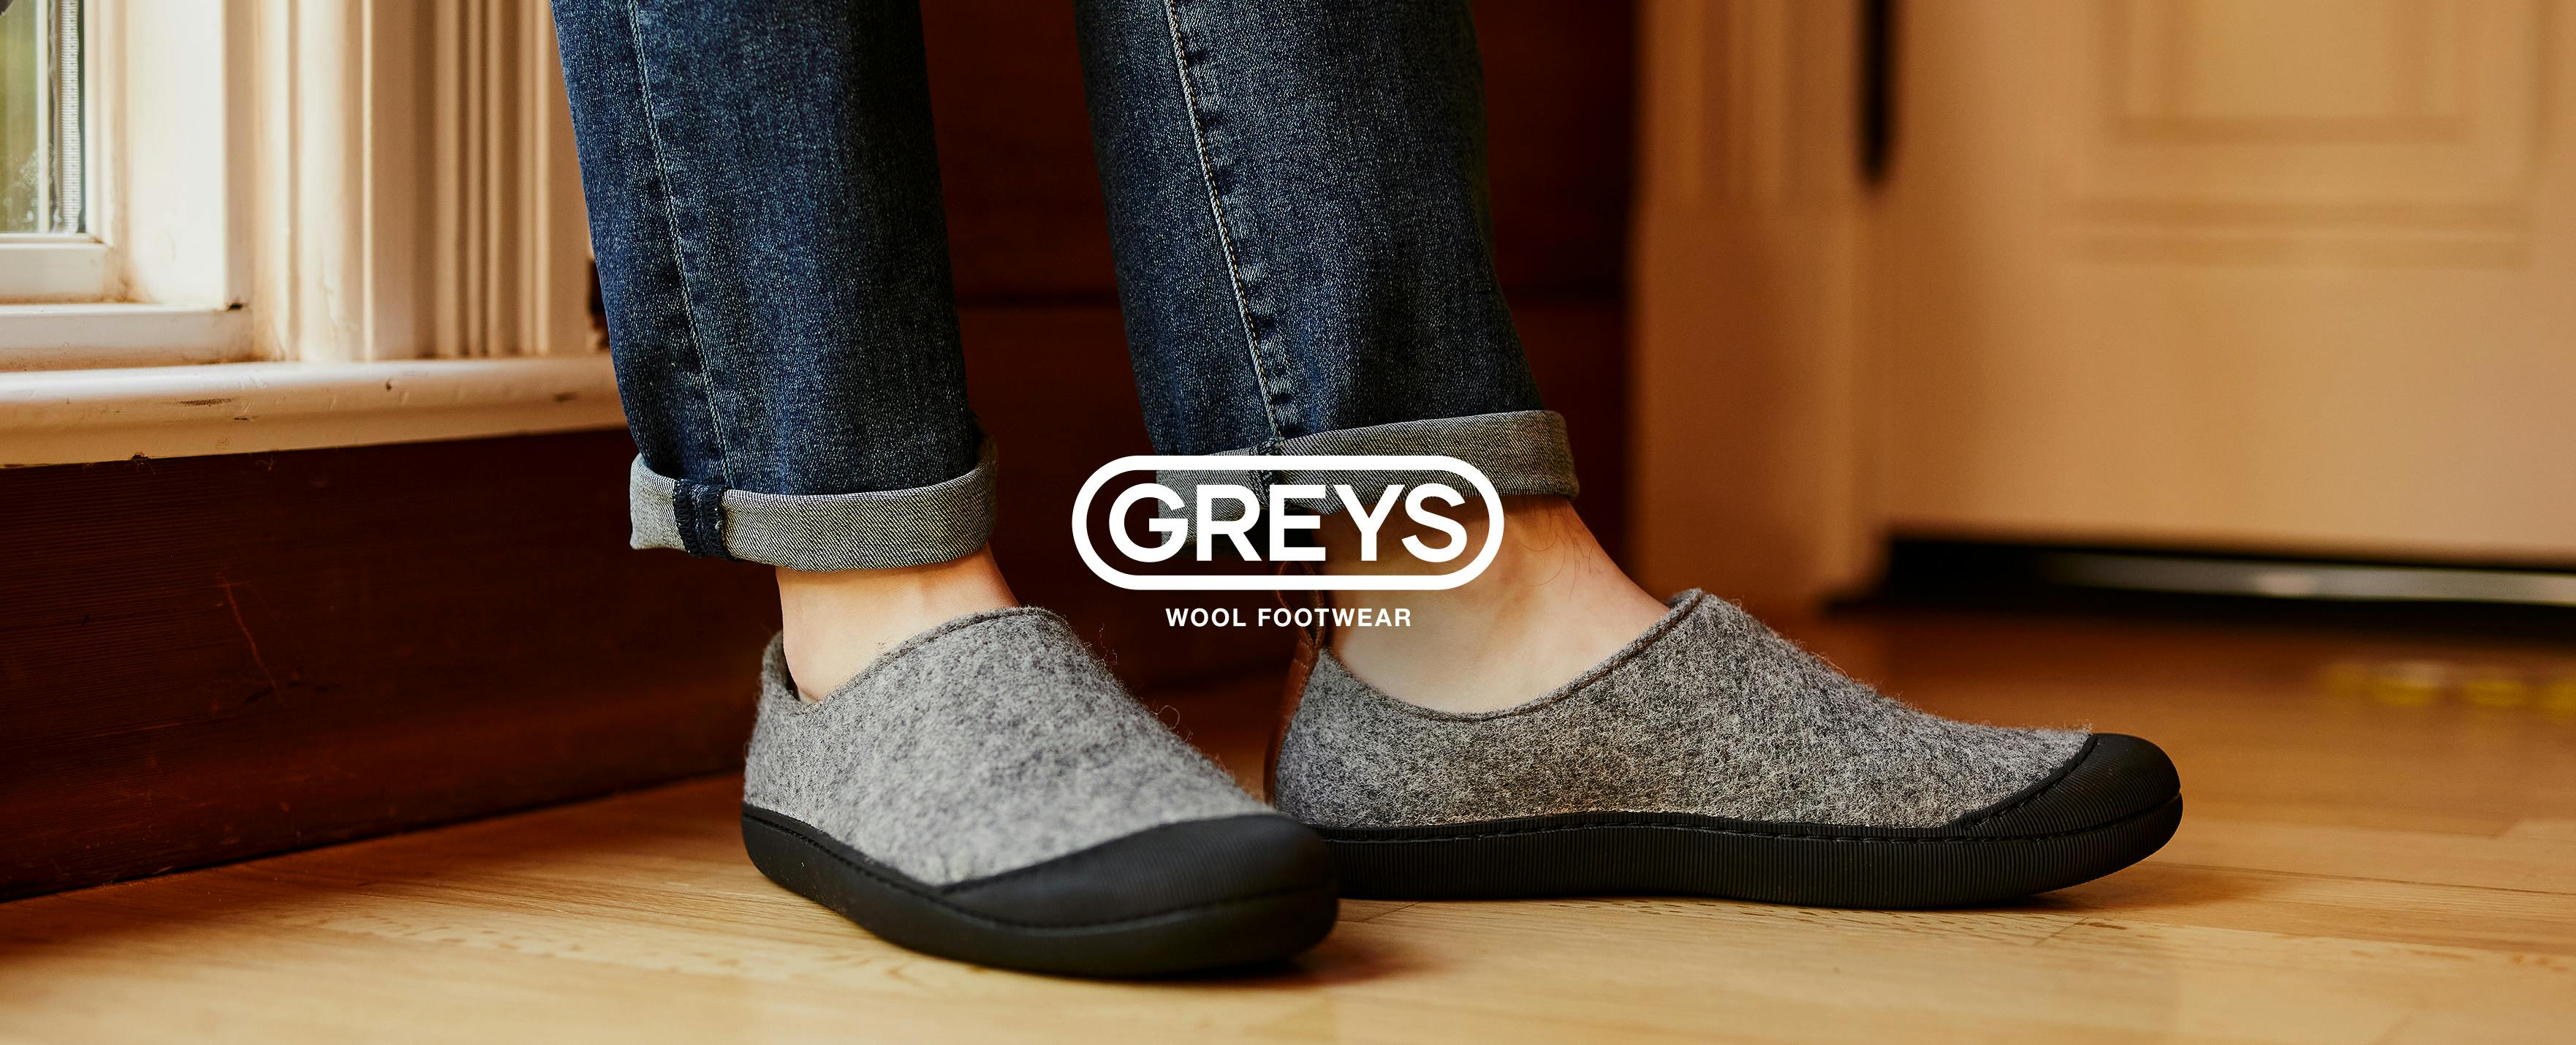 Greys slippers